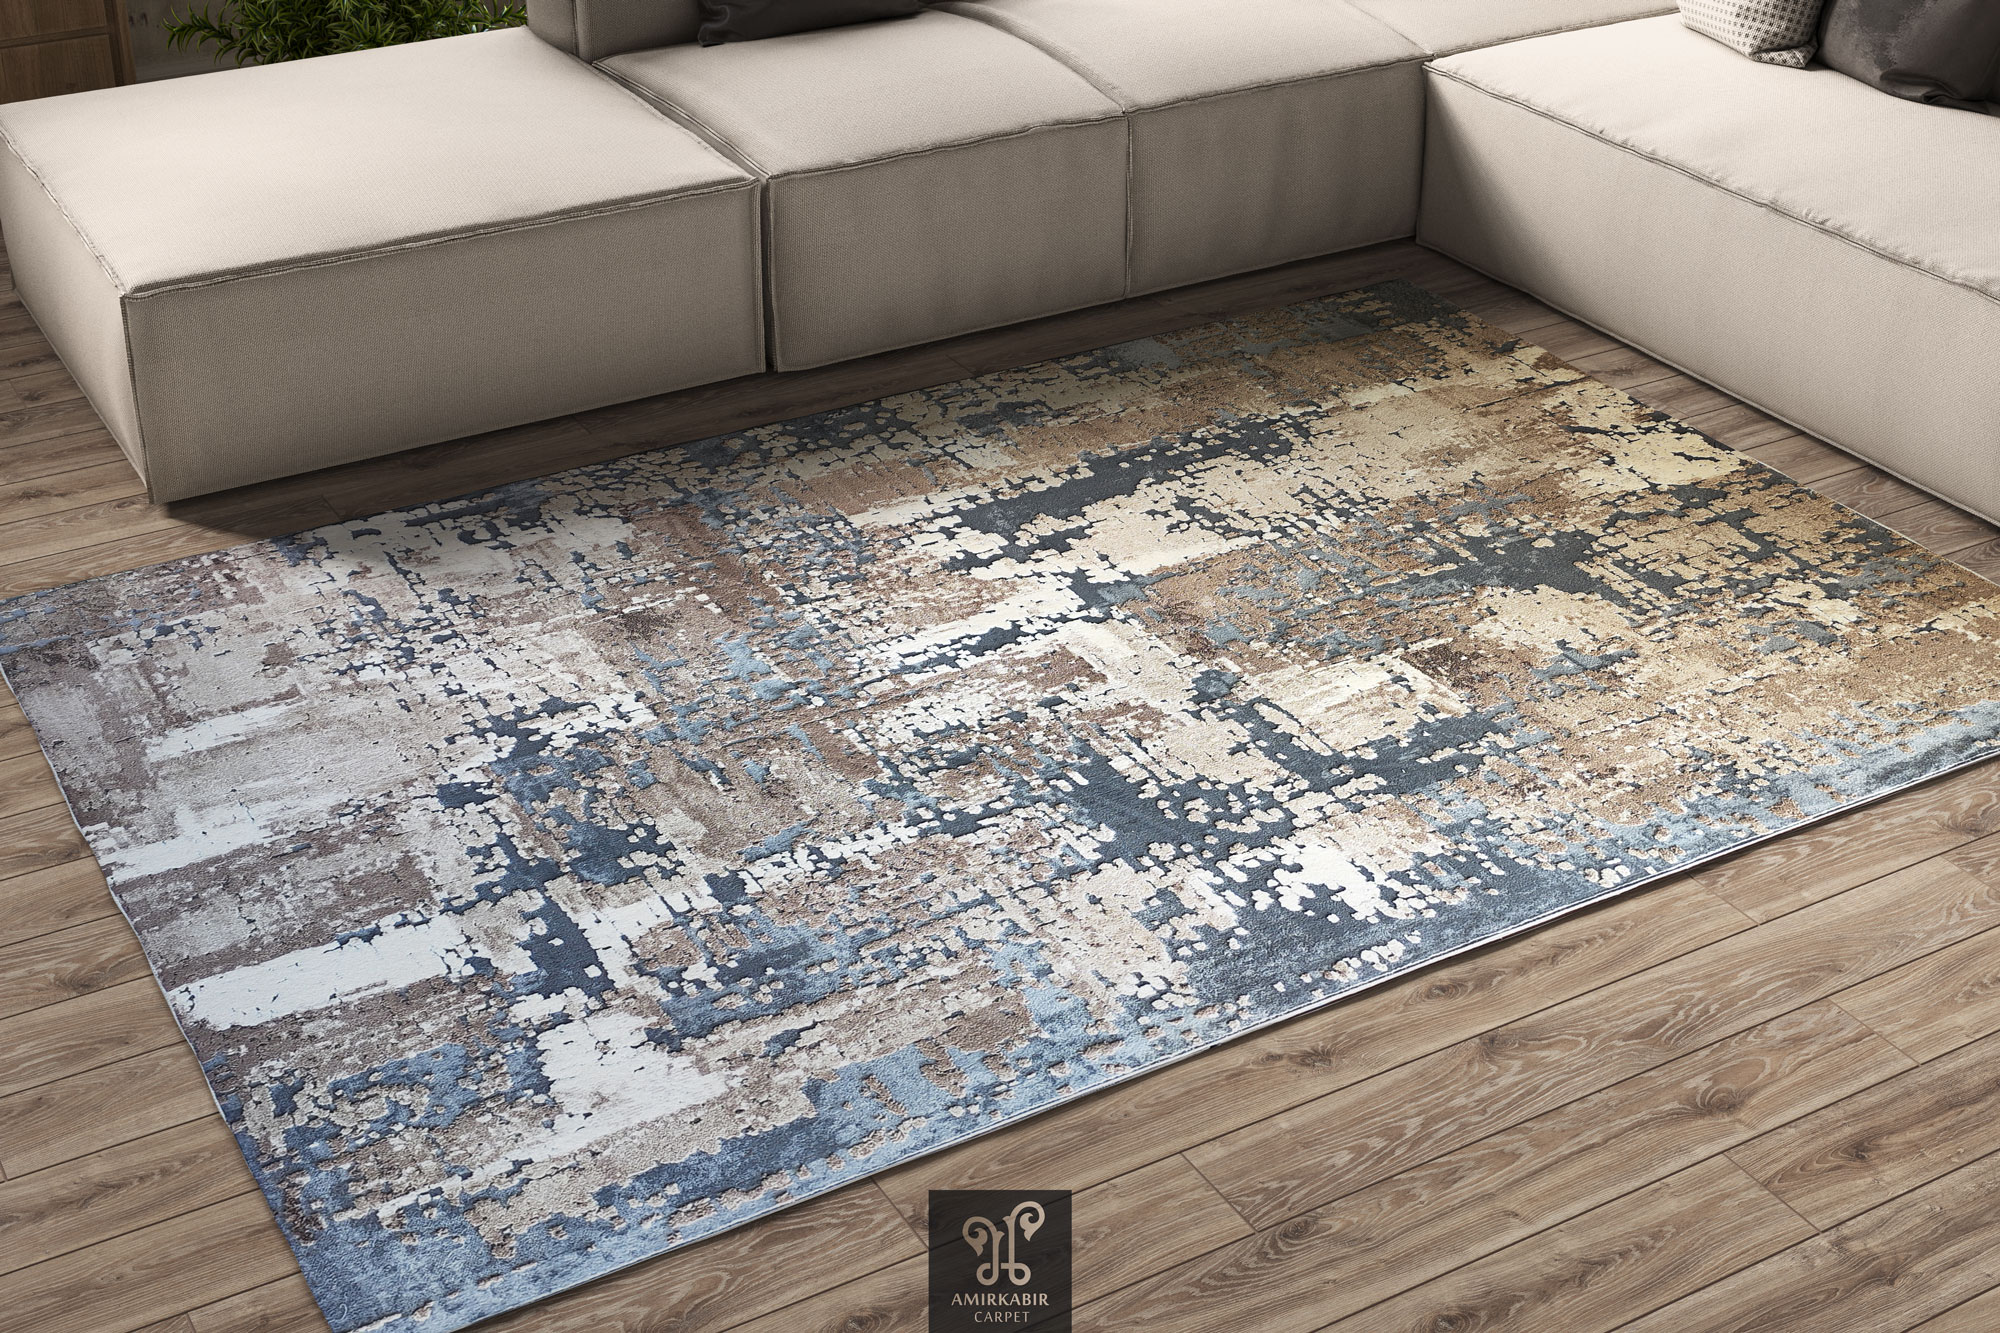 Vintage 400 reeds carpet -1300 Density RUG - Modern Carpet - Harmony Carpet 1111 carpet code